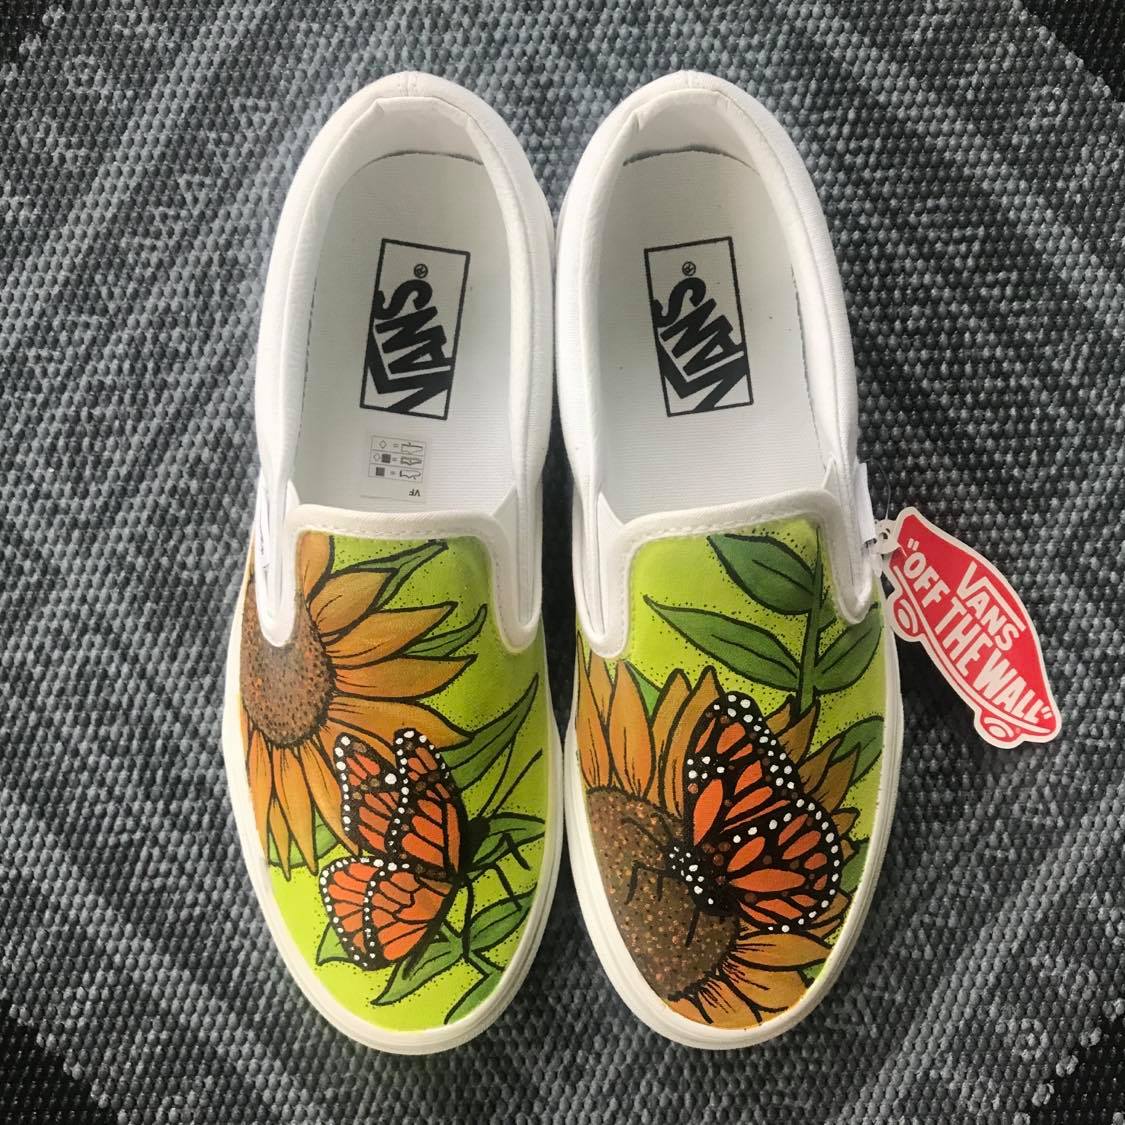 sunflower painted vans